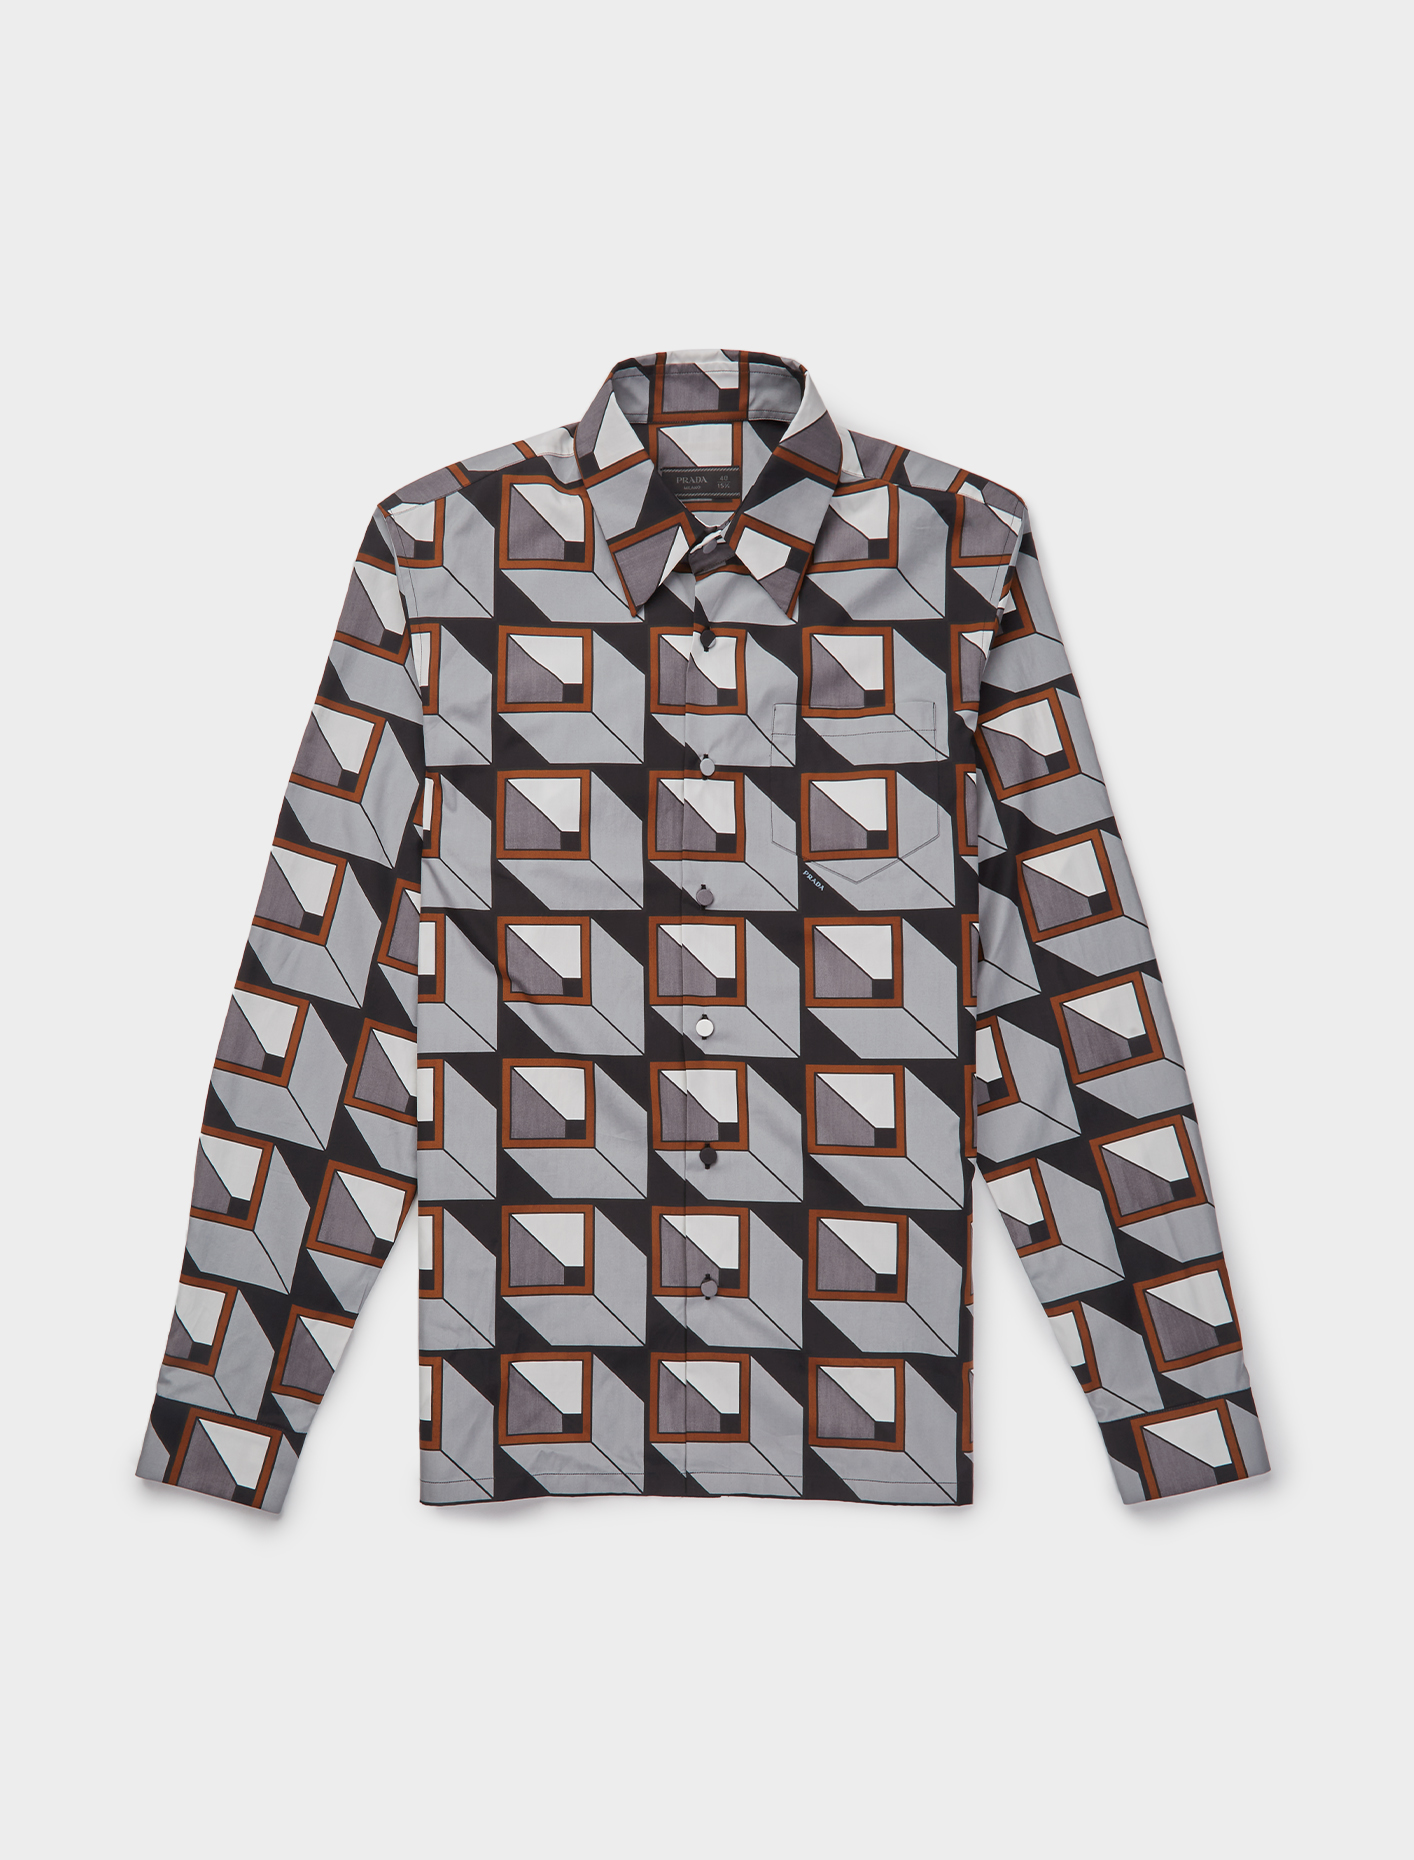 Prada 70s Cube Print Shirt in Steel | Voo Store Berlin | Worldwide 